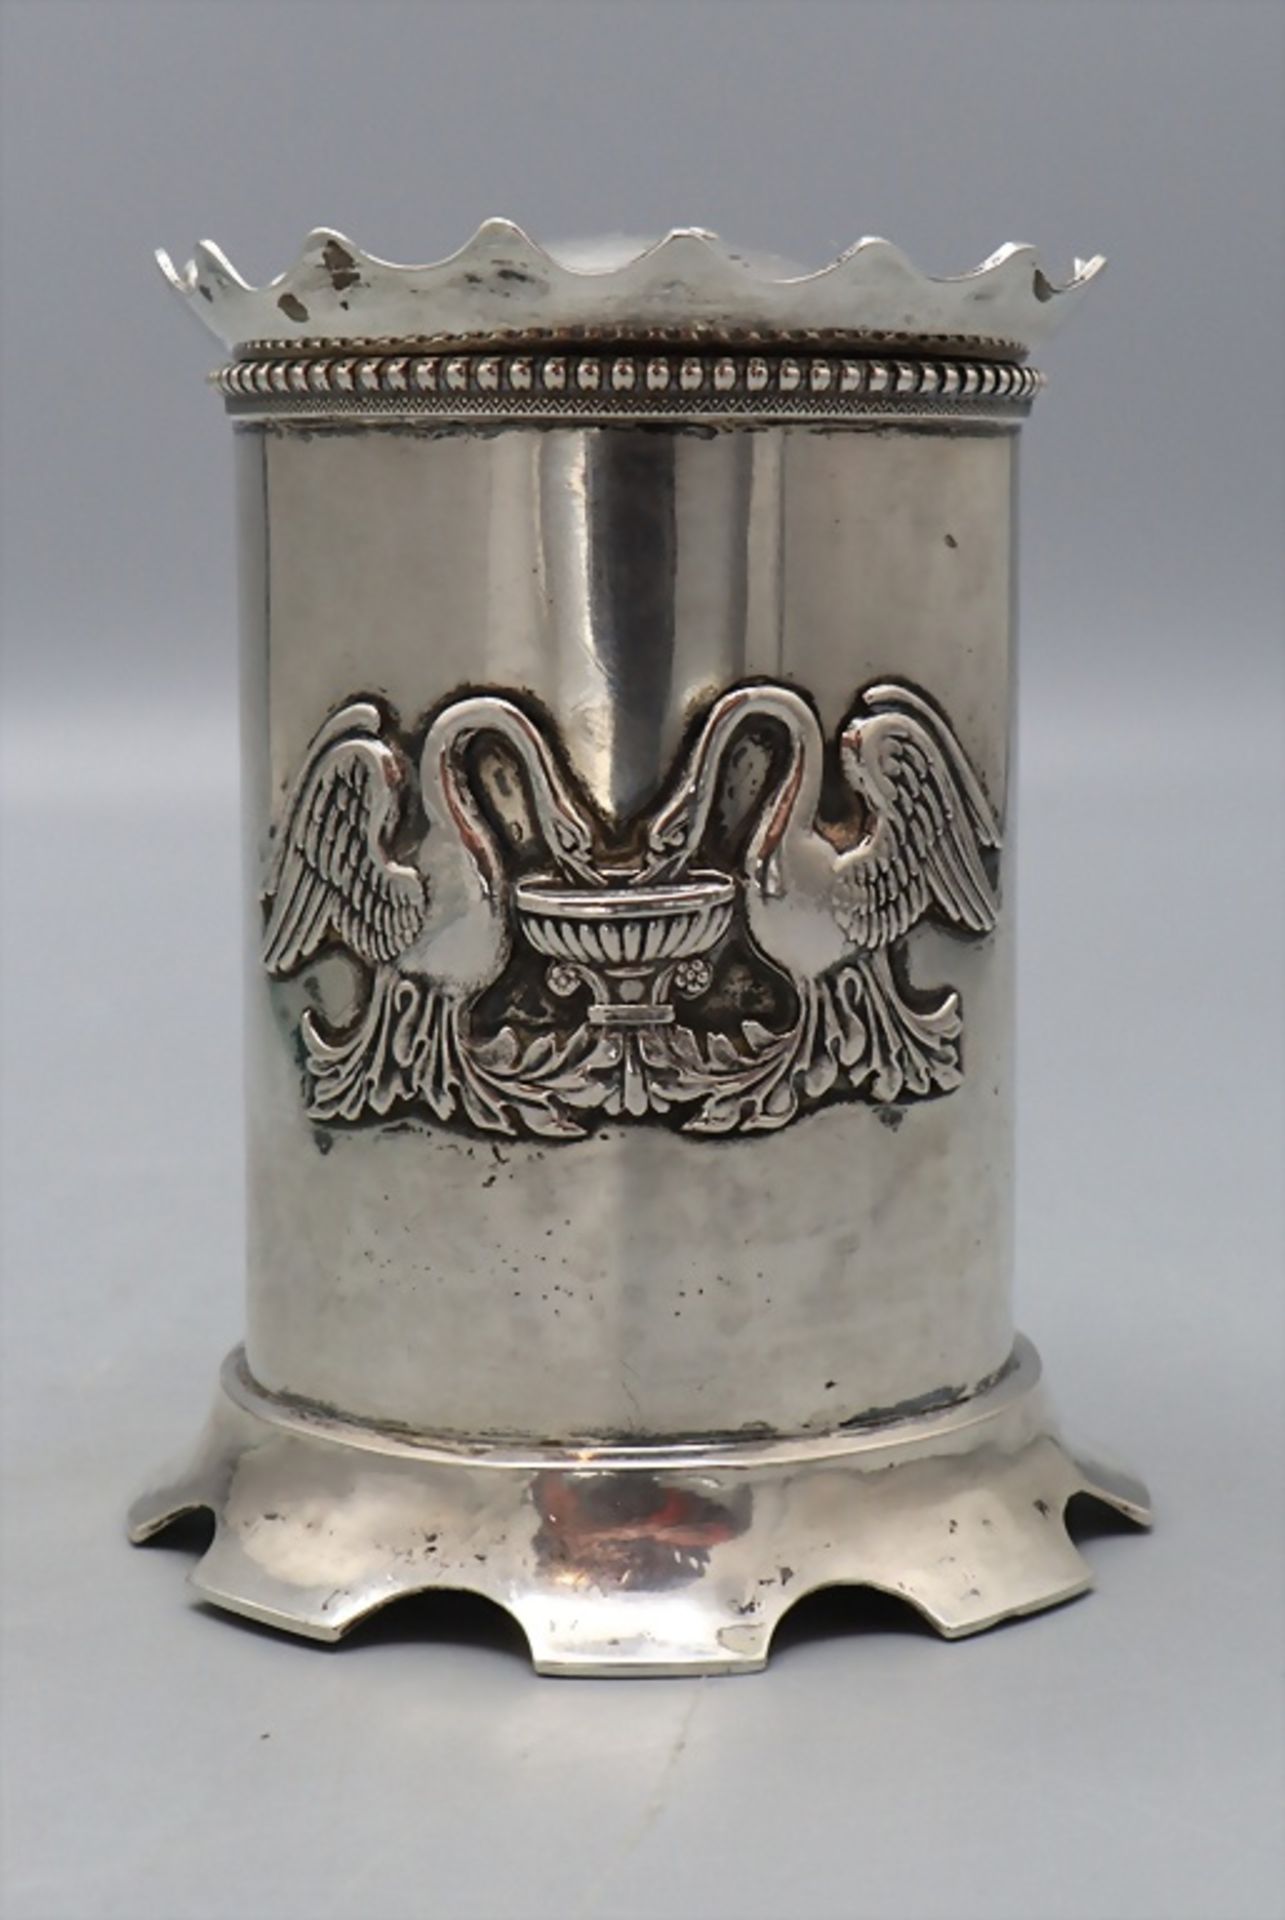 Wachsstockhalter Dose / A silver wax stick holder box, Johann Samuel Schemberg, Nürnberg, um 1800 - Image 2 of 7